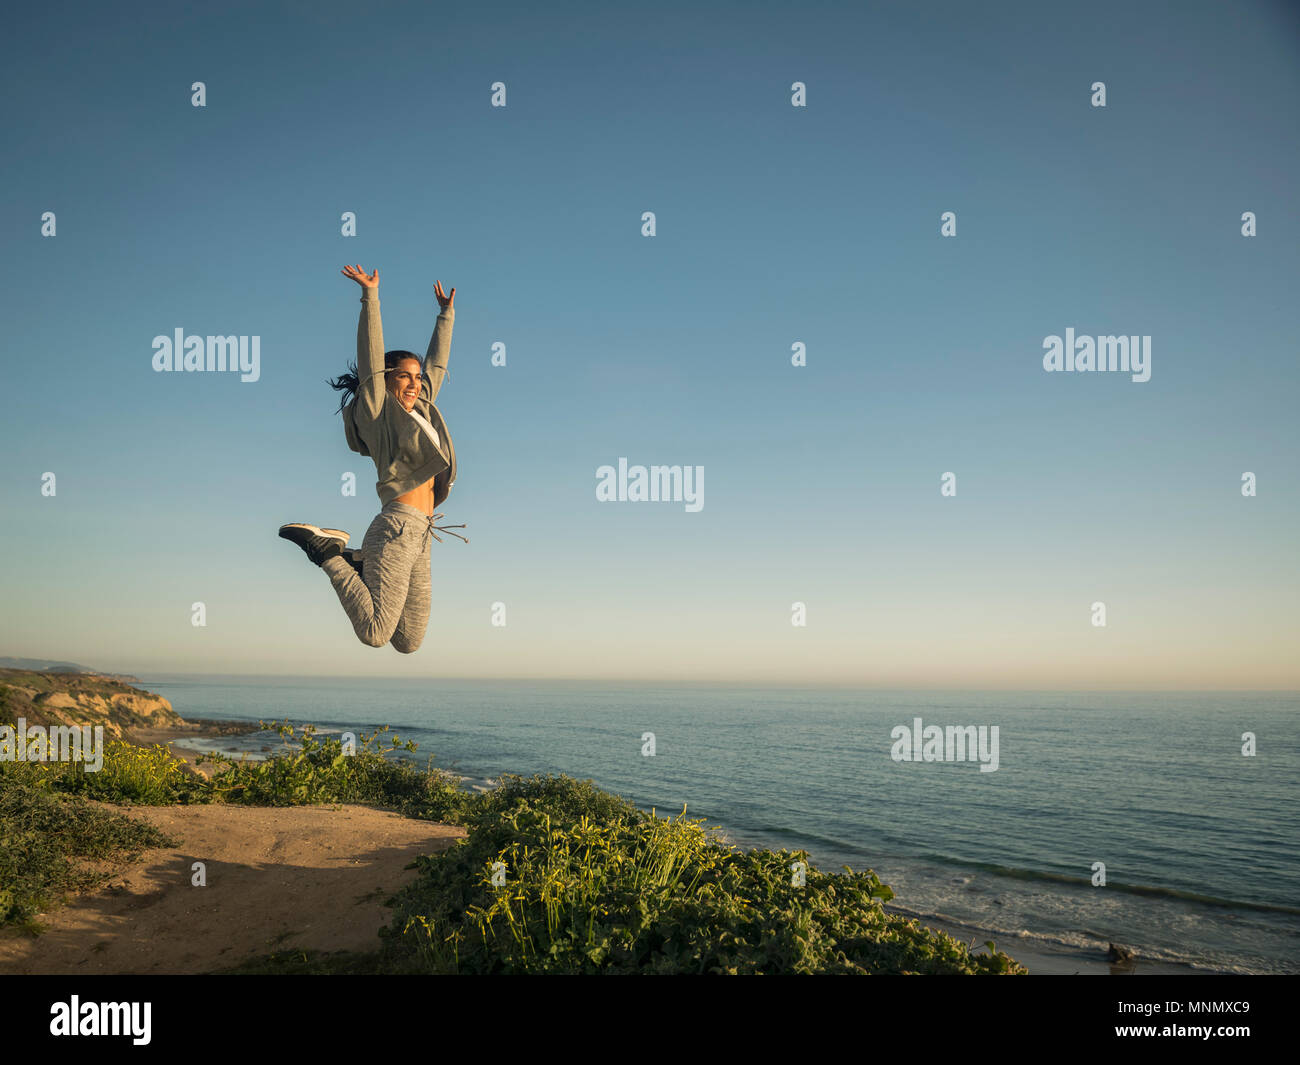 USA, California, Newport Beach, Woman jumping against clear sky Stock Photo